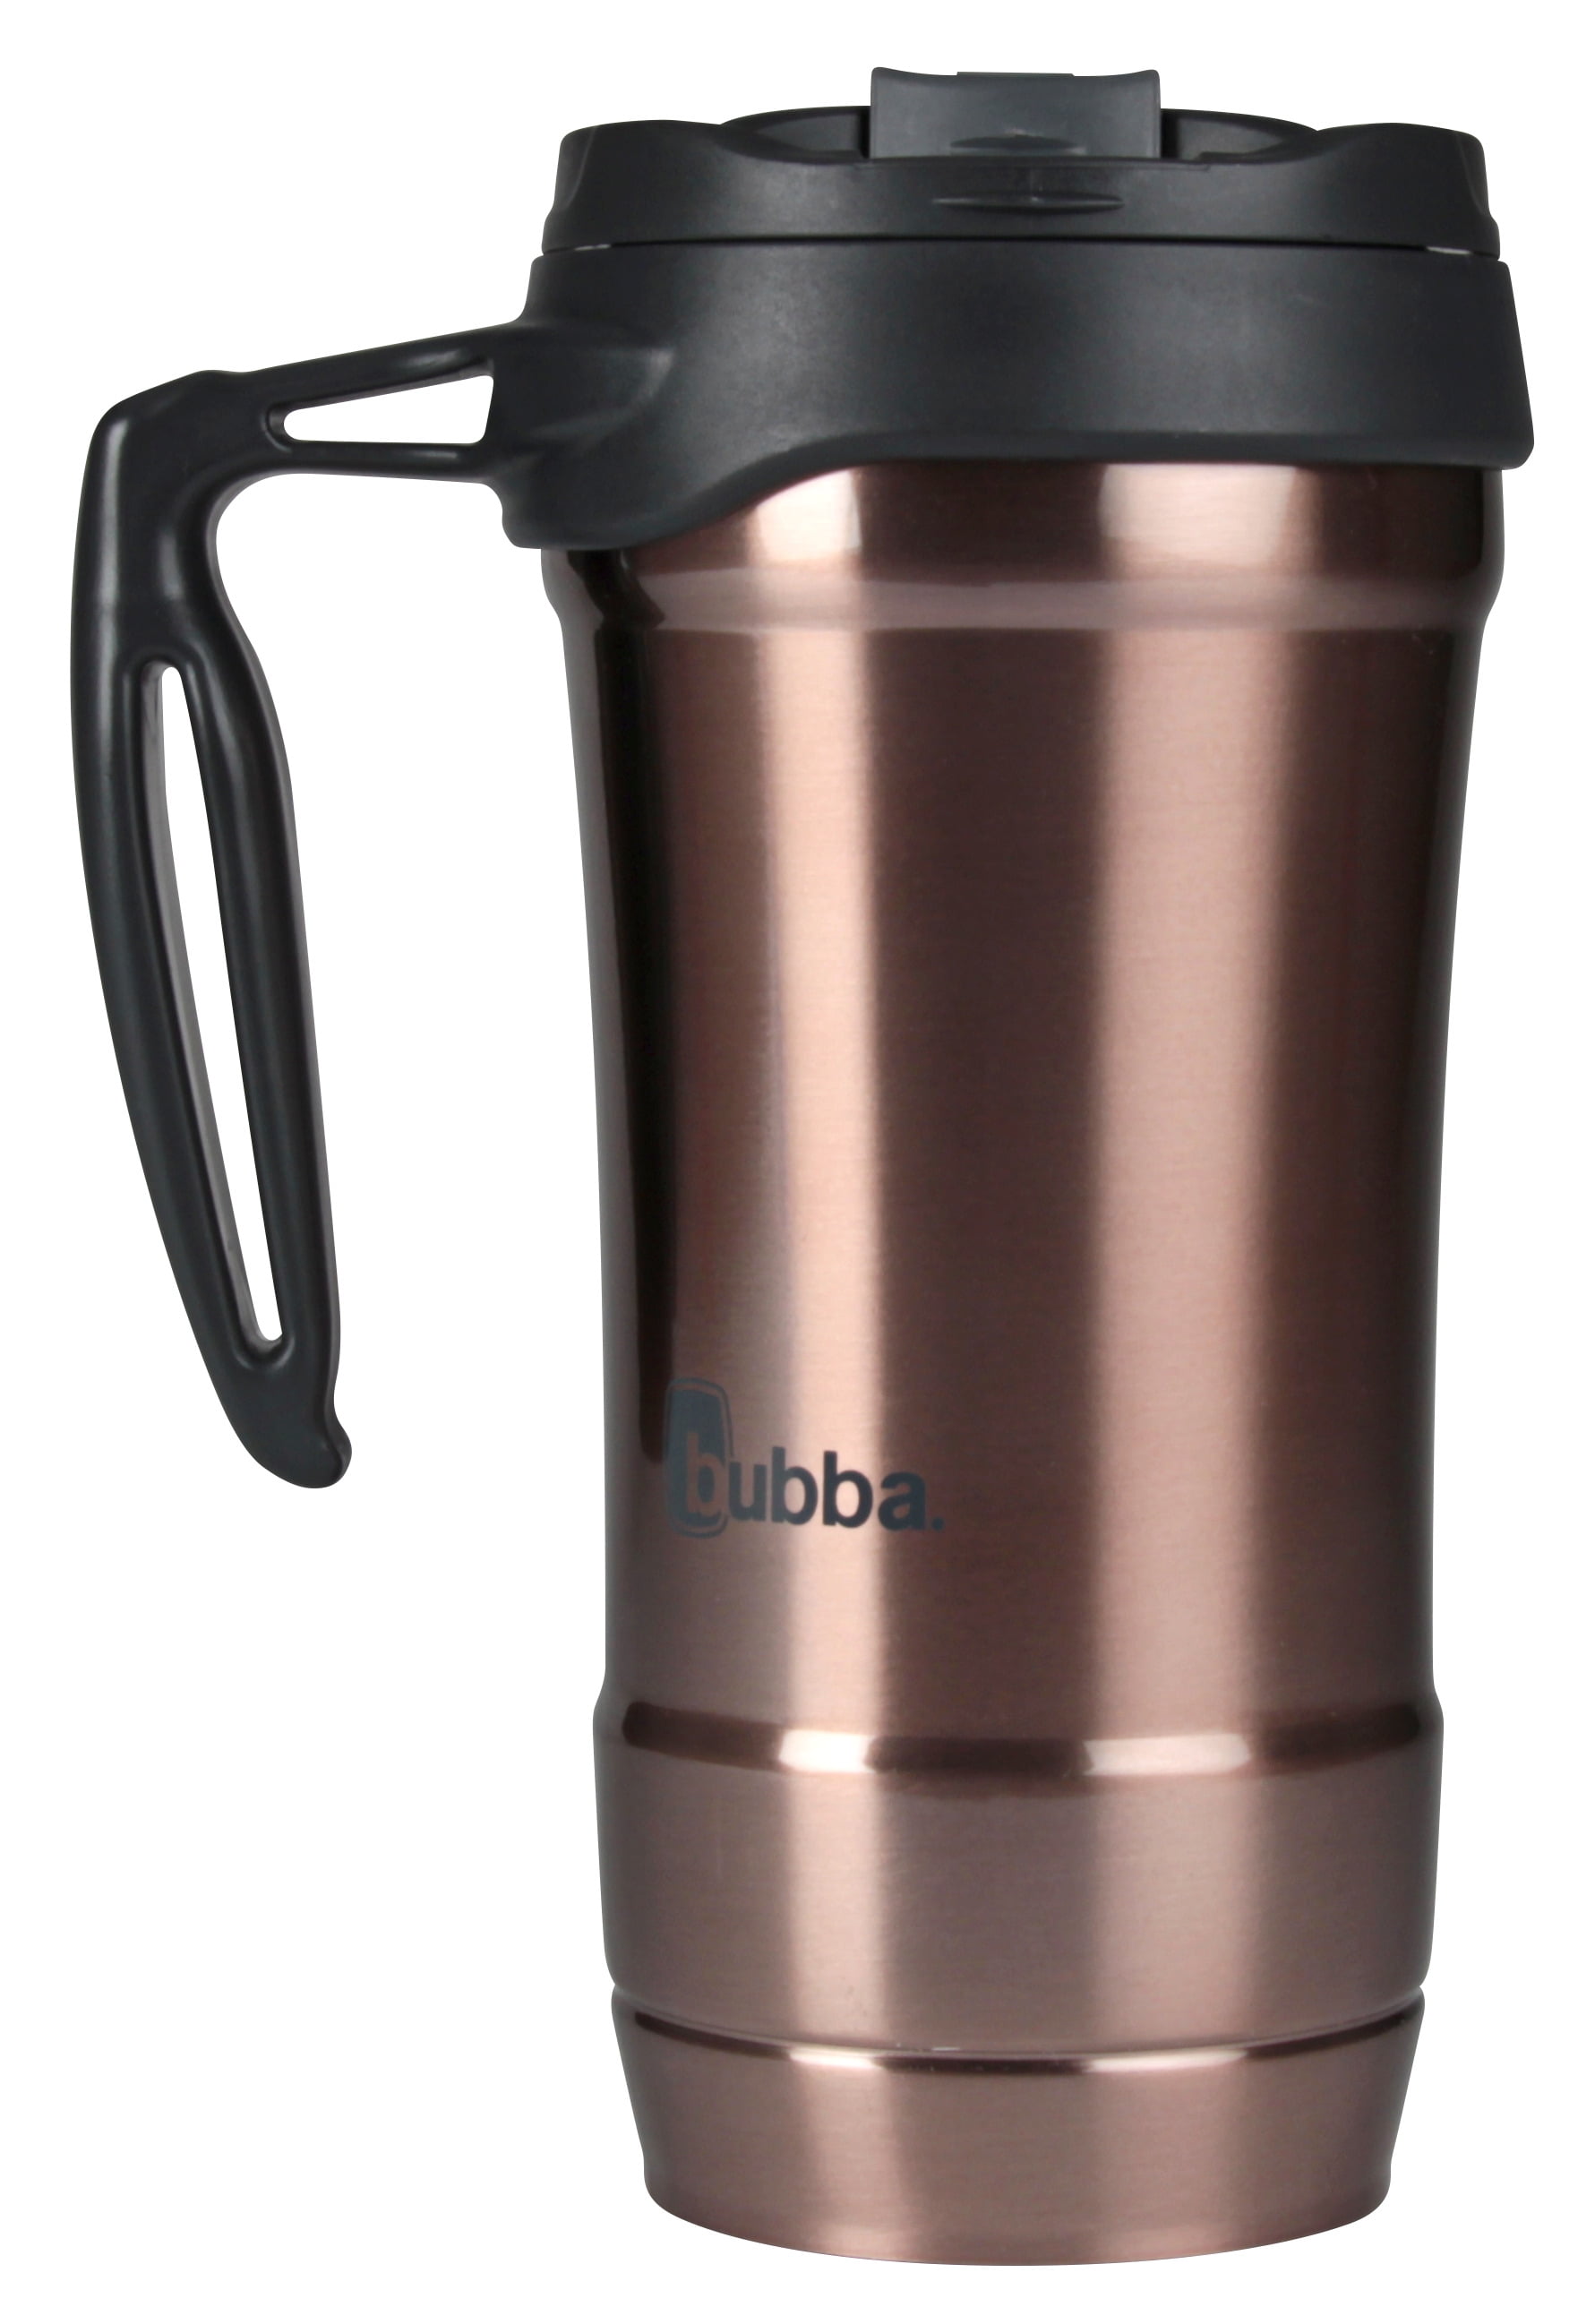 Bubba 18 oz. Black Classic Insulated Travel Mug 